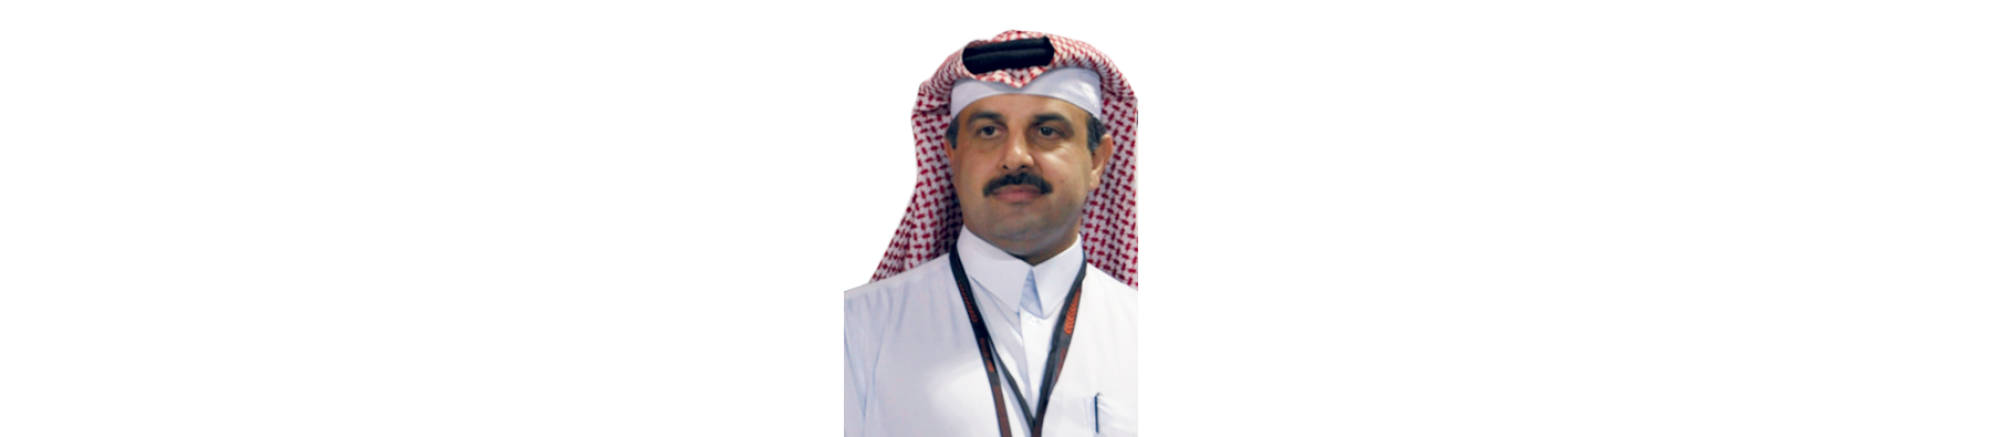 WMSC Vice-President Al-Attiyah